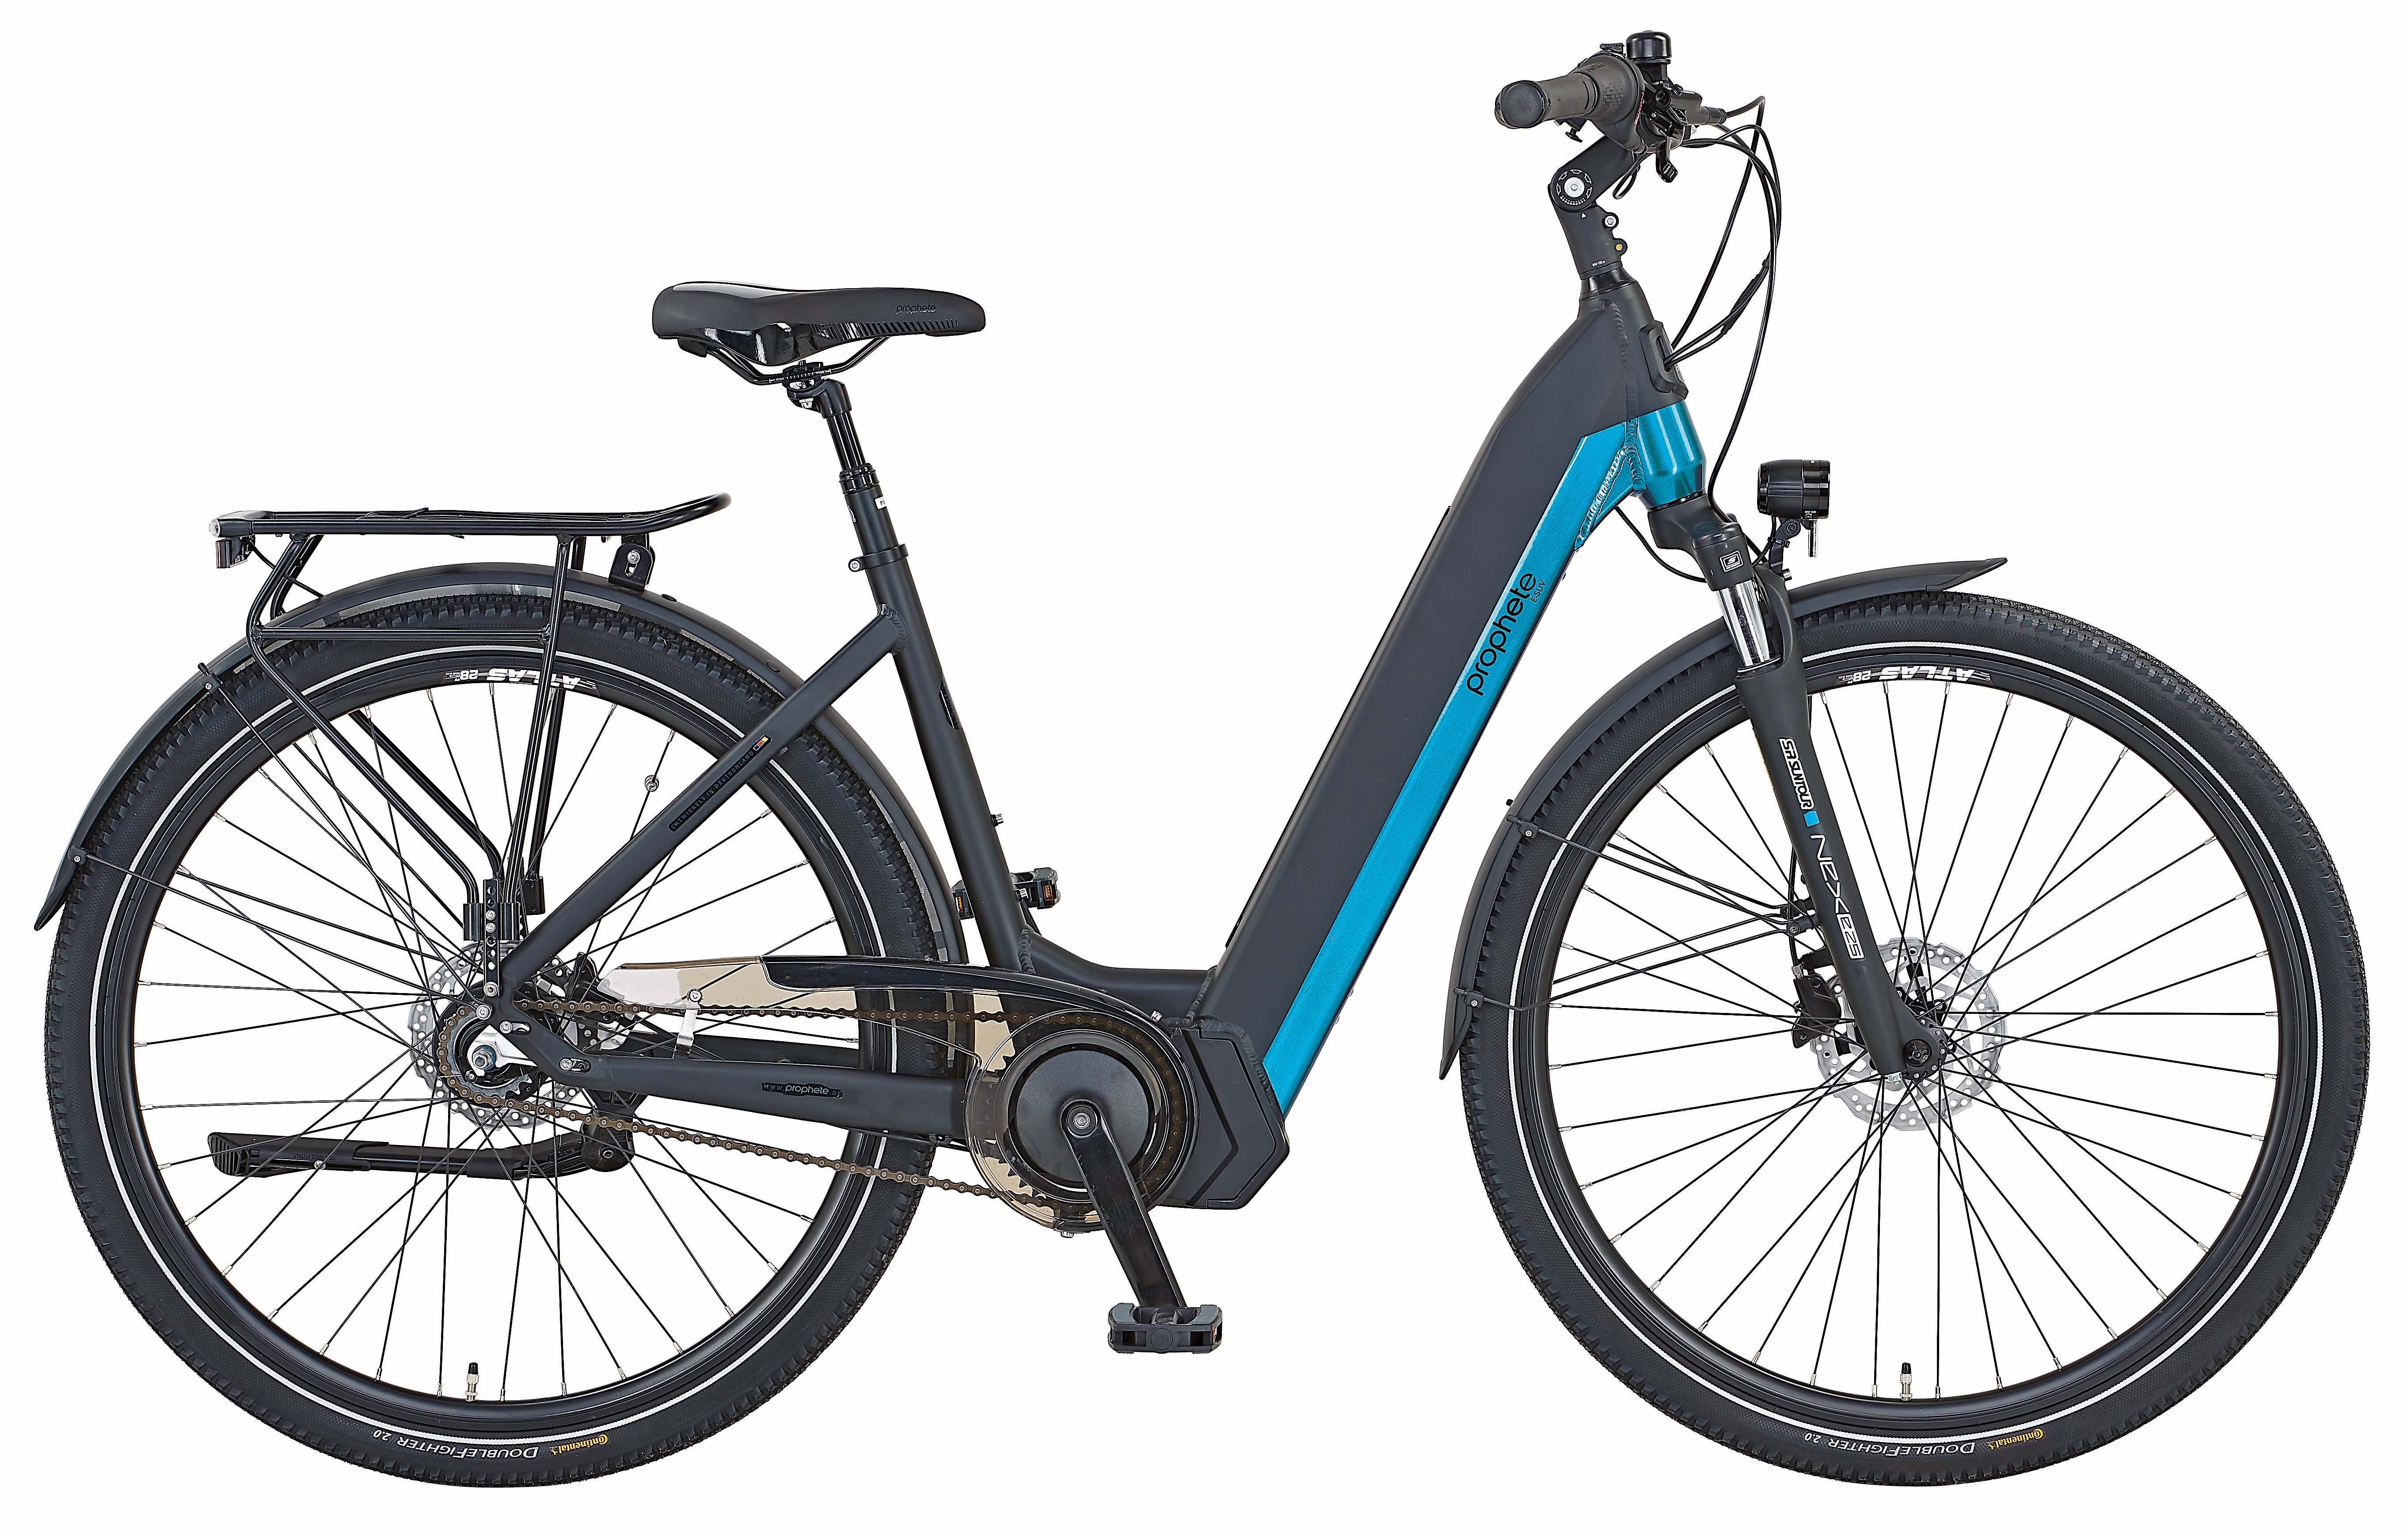 NEU Prophete City Elektro-Fahrrad 36 Volt 12,5 Ah Samsung 7-Gang Nexus Nabe 2018 